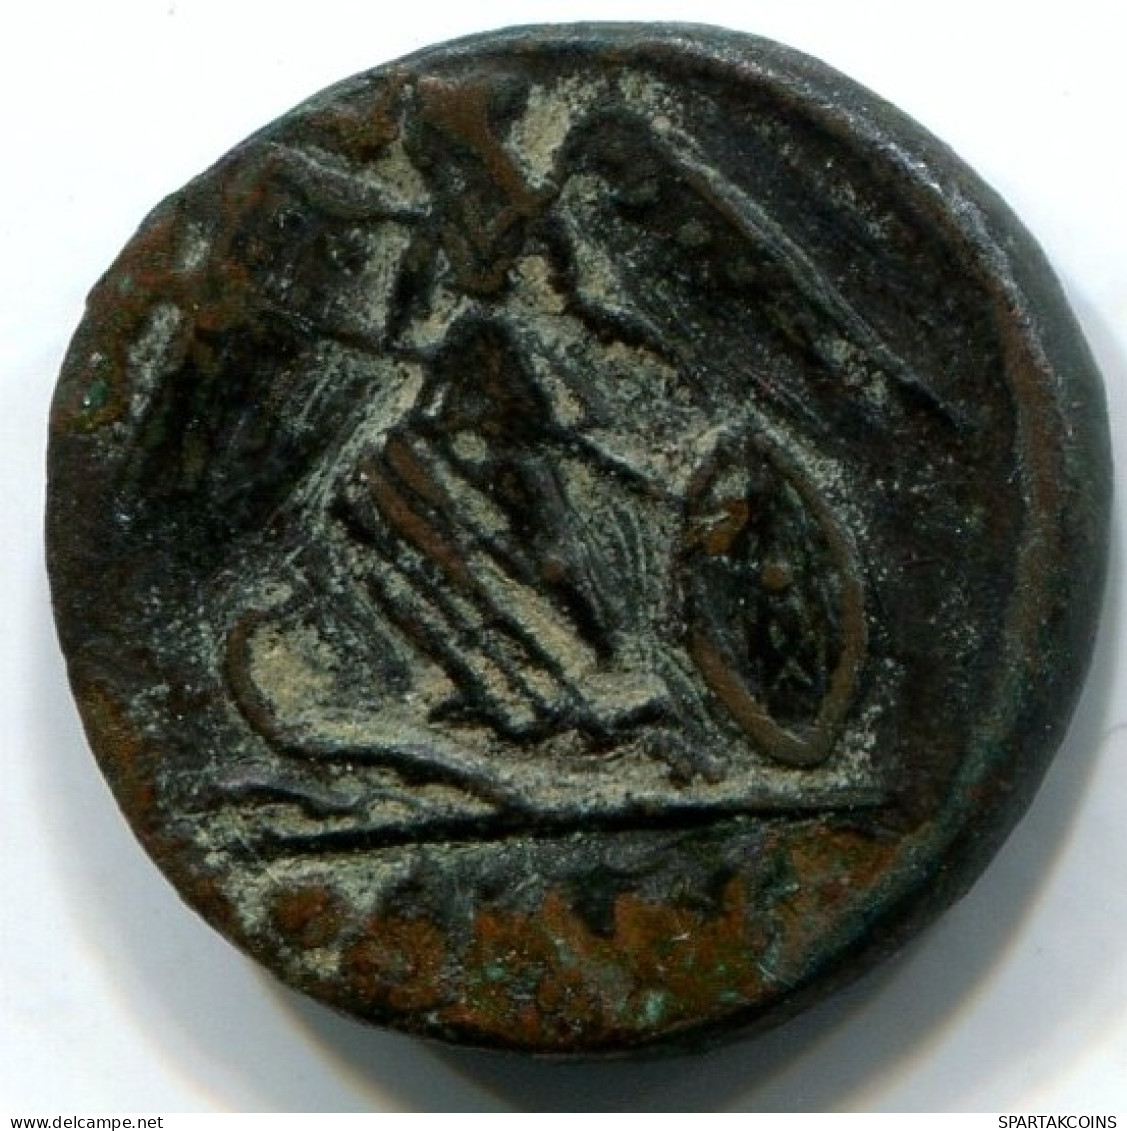 CONSTANTINE I AE SMALL FOLLIS Antike RÖMISCHEN KAISERZEIT Münze #ANC12364.6.D.A - The Christian Empire (307 AD Tot 363 AD)